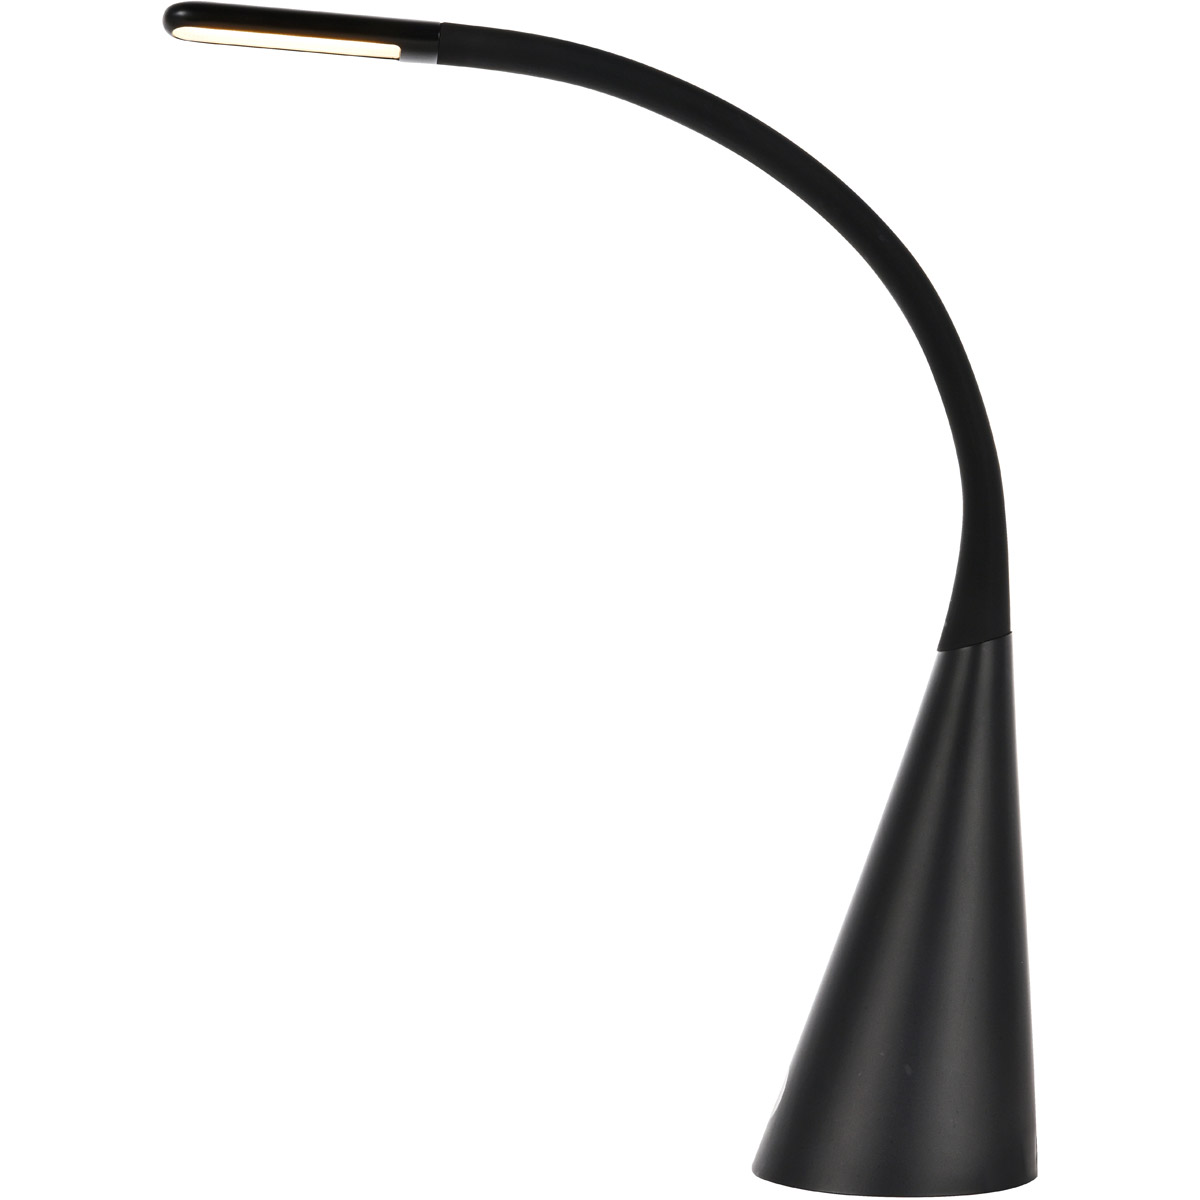 Ledds005 Sleek Led Desk Lamp With Smooth Touch Dimmer & Usb, Matte Black